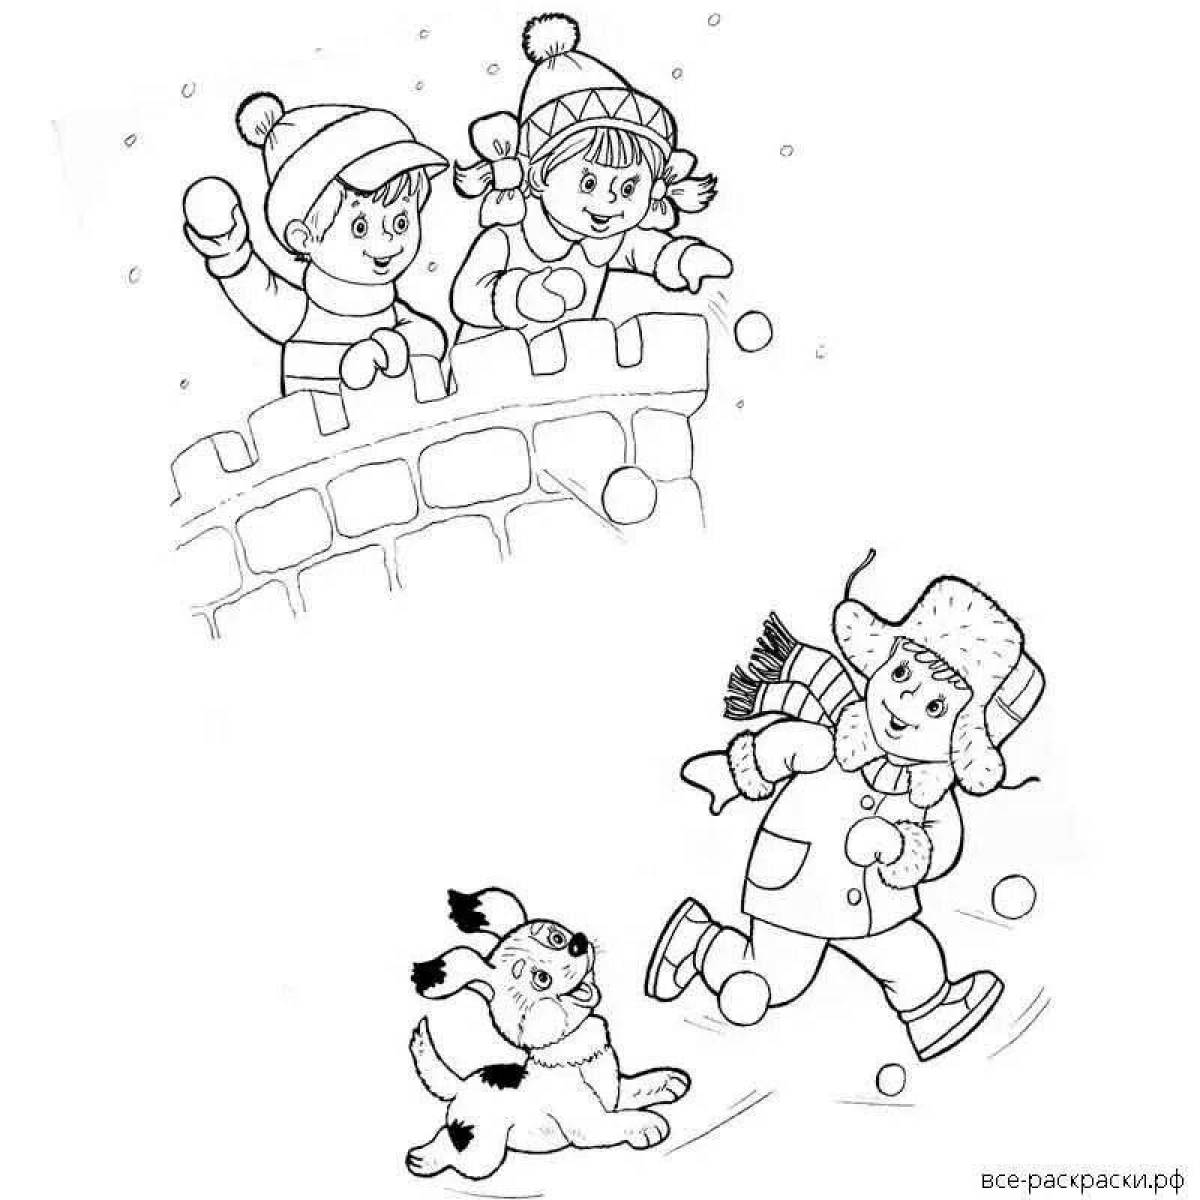 Snowball fight #6